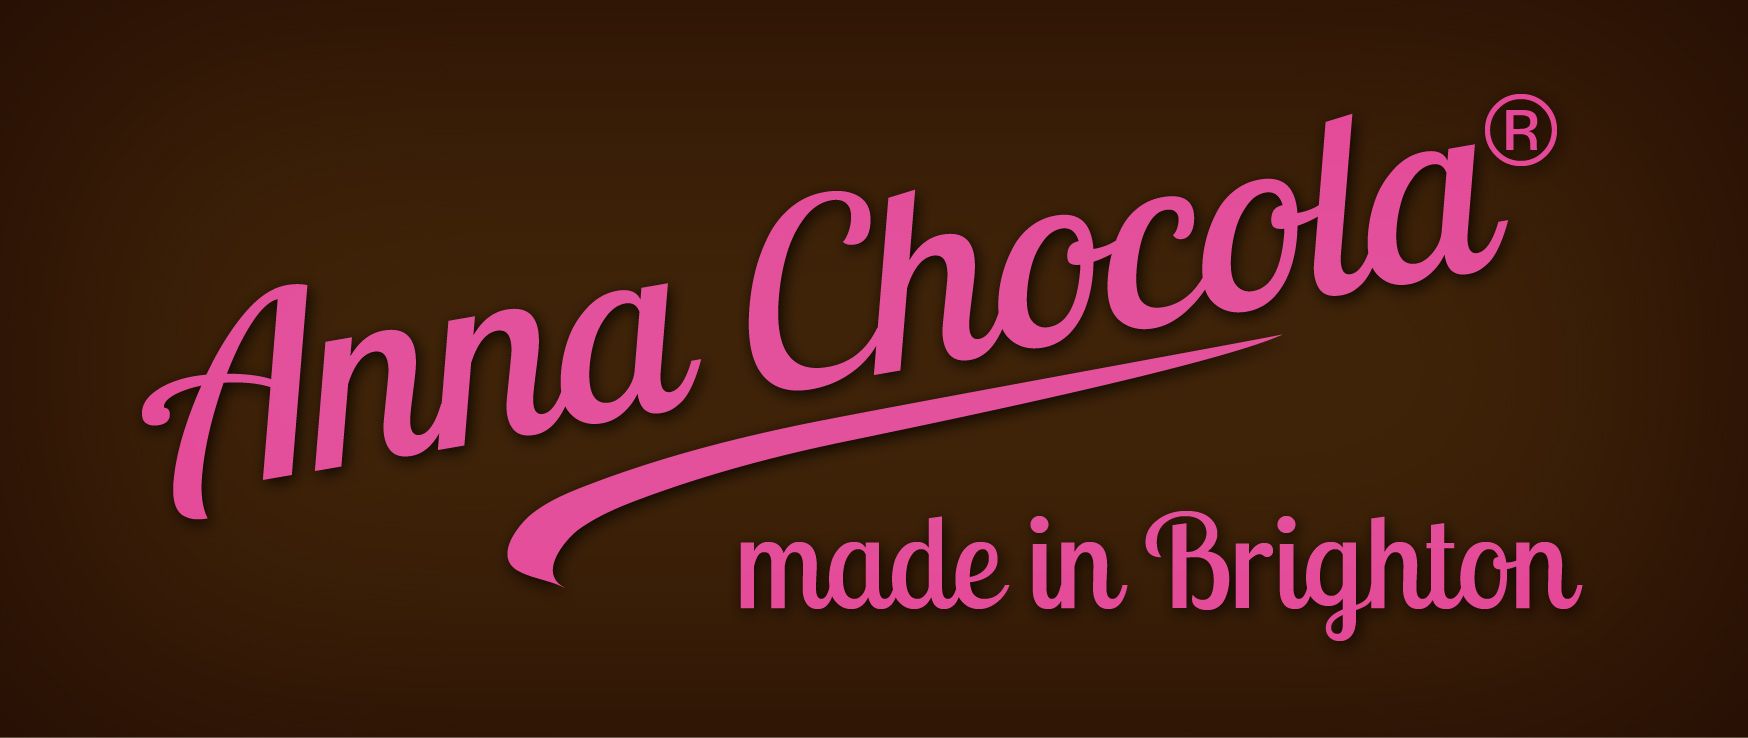  30s CLOCHE HAT SILK WOOL checks Original Anna Chocola ® Brighton L XL